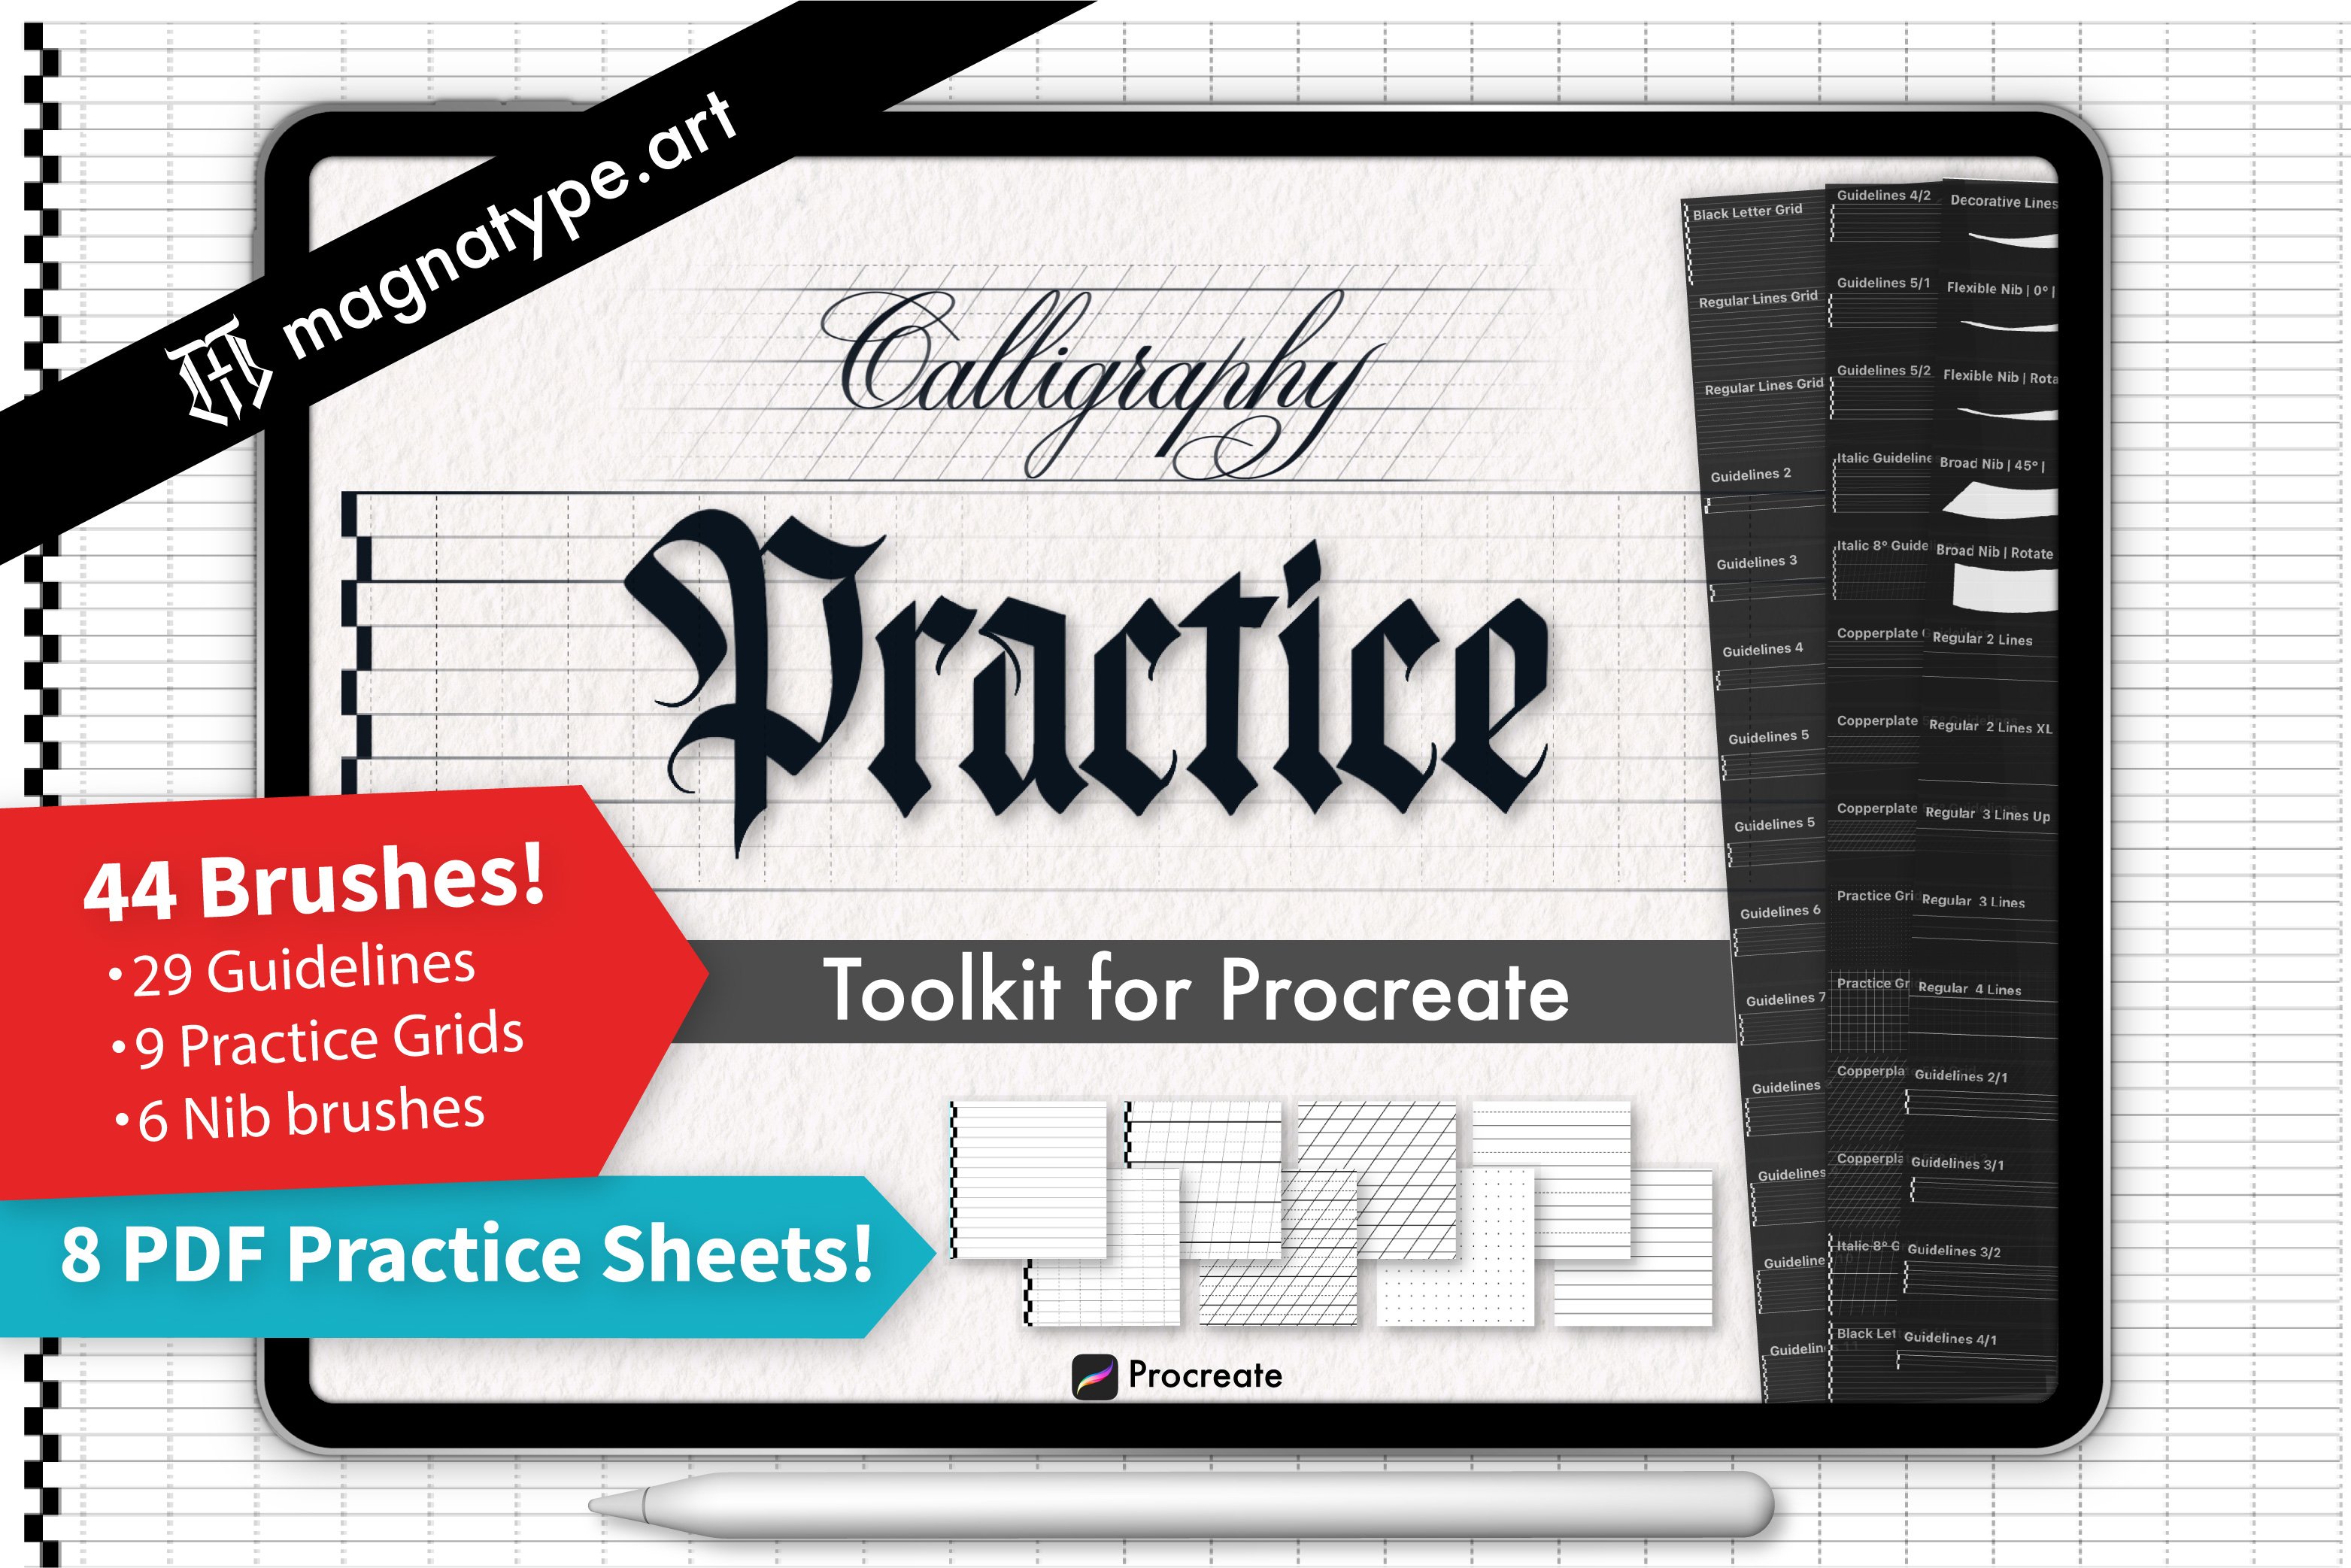 Copperplate (Full Set) Practice Workbook (iPad pro)